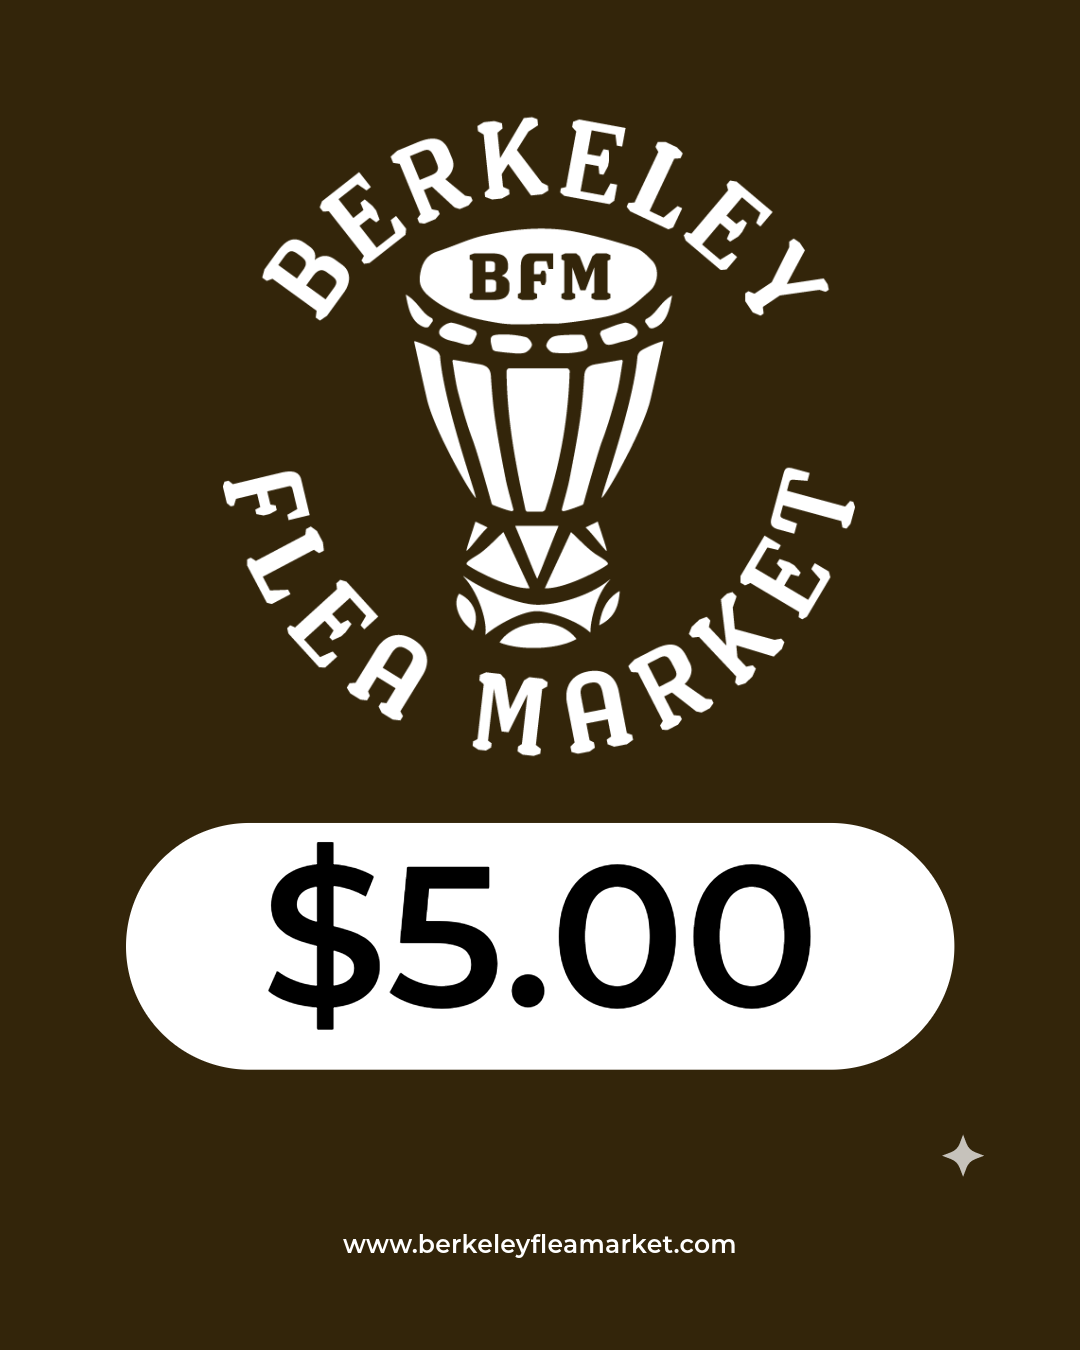 donate 5.00 to berkeley flea market